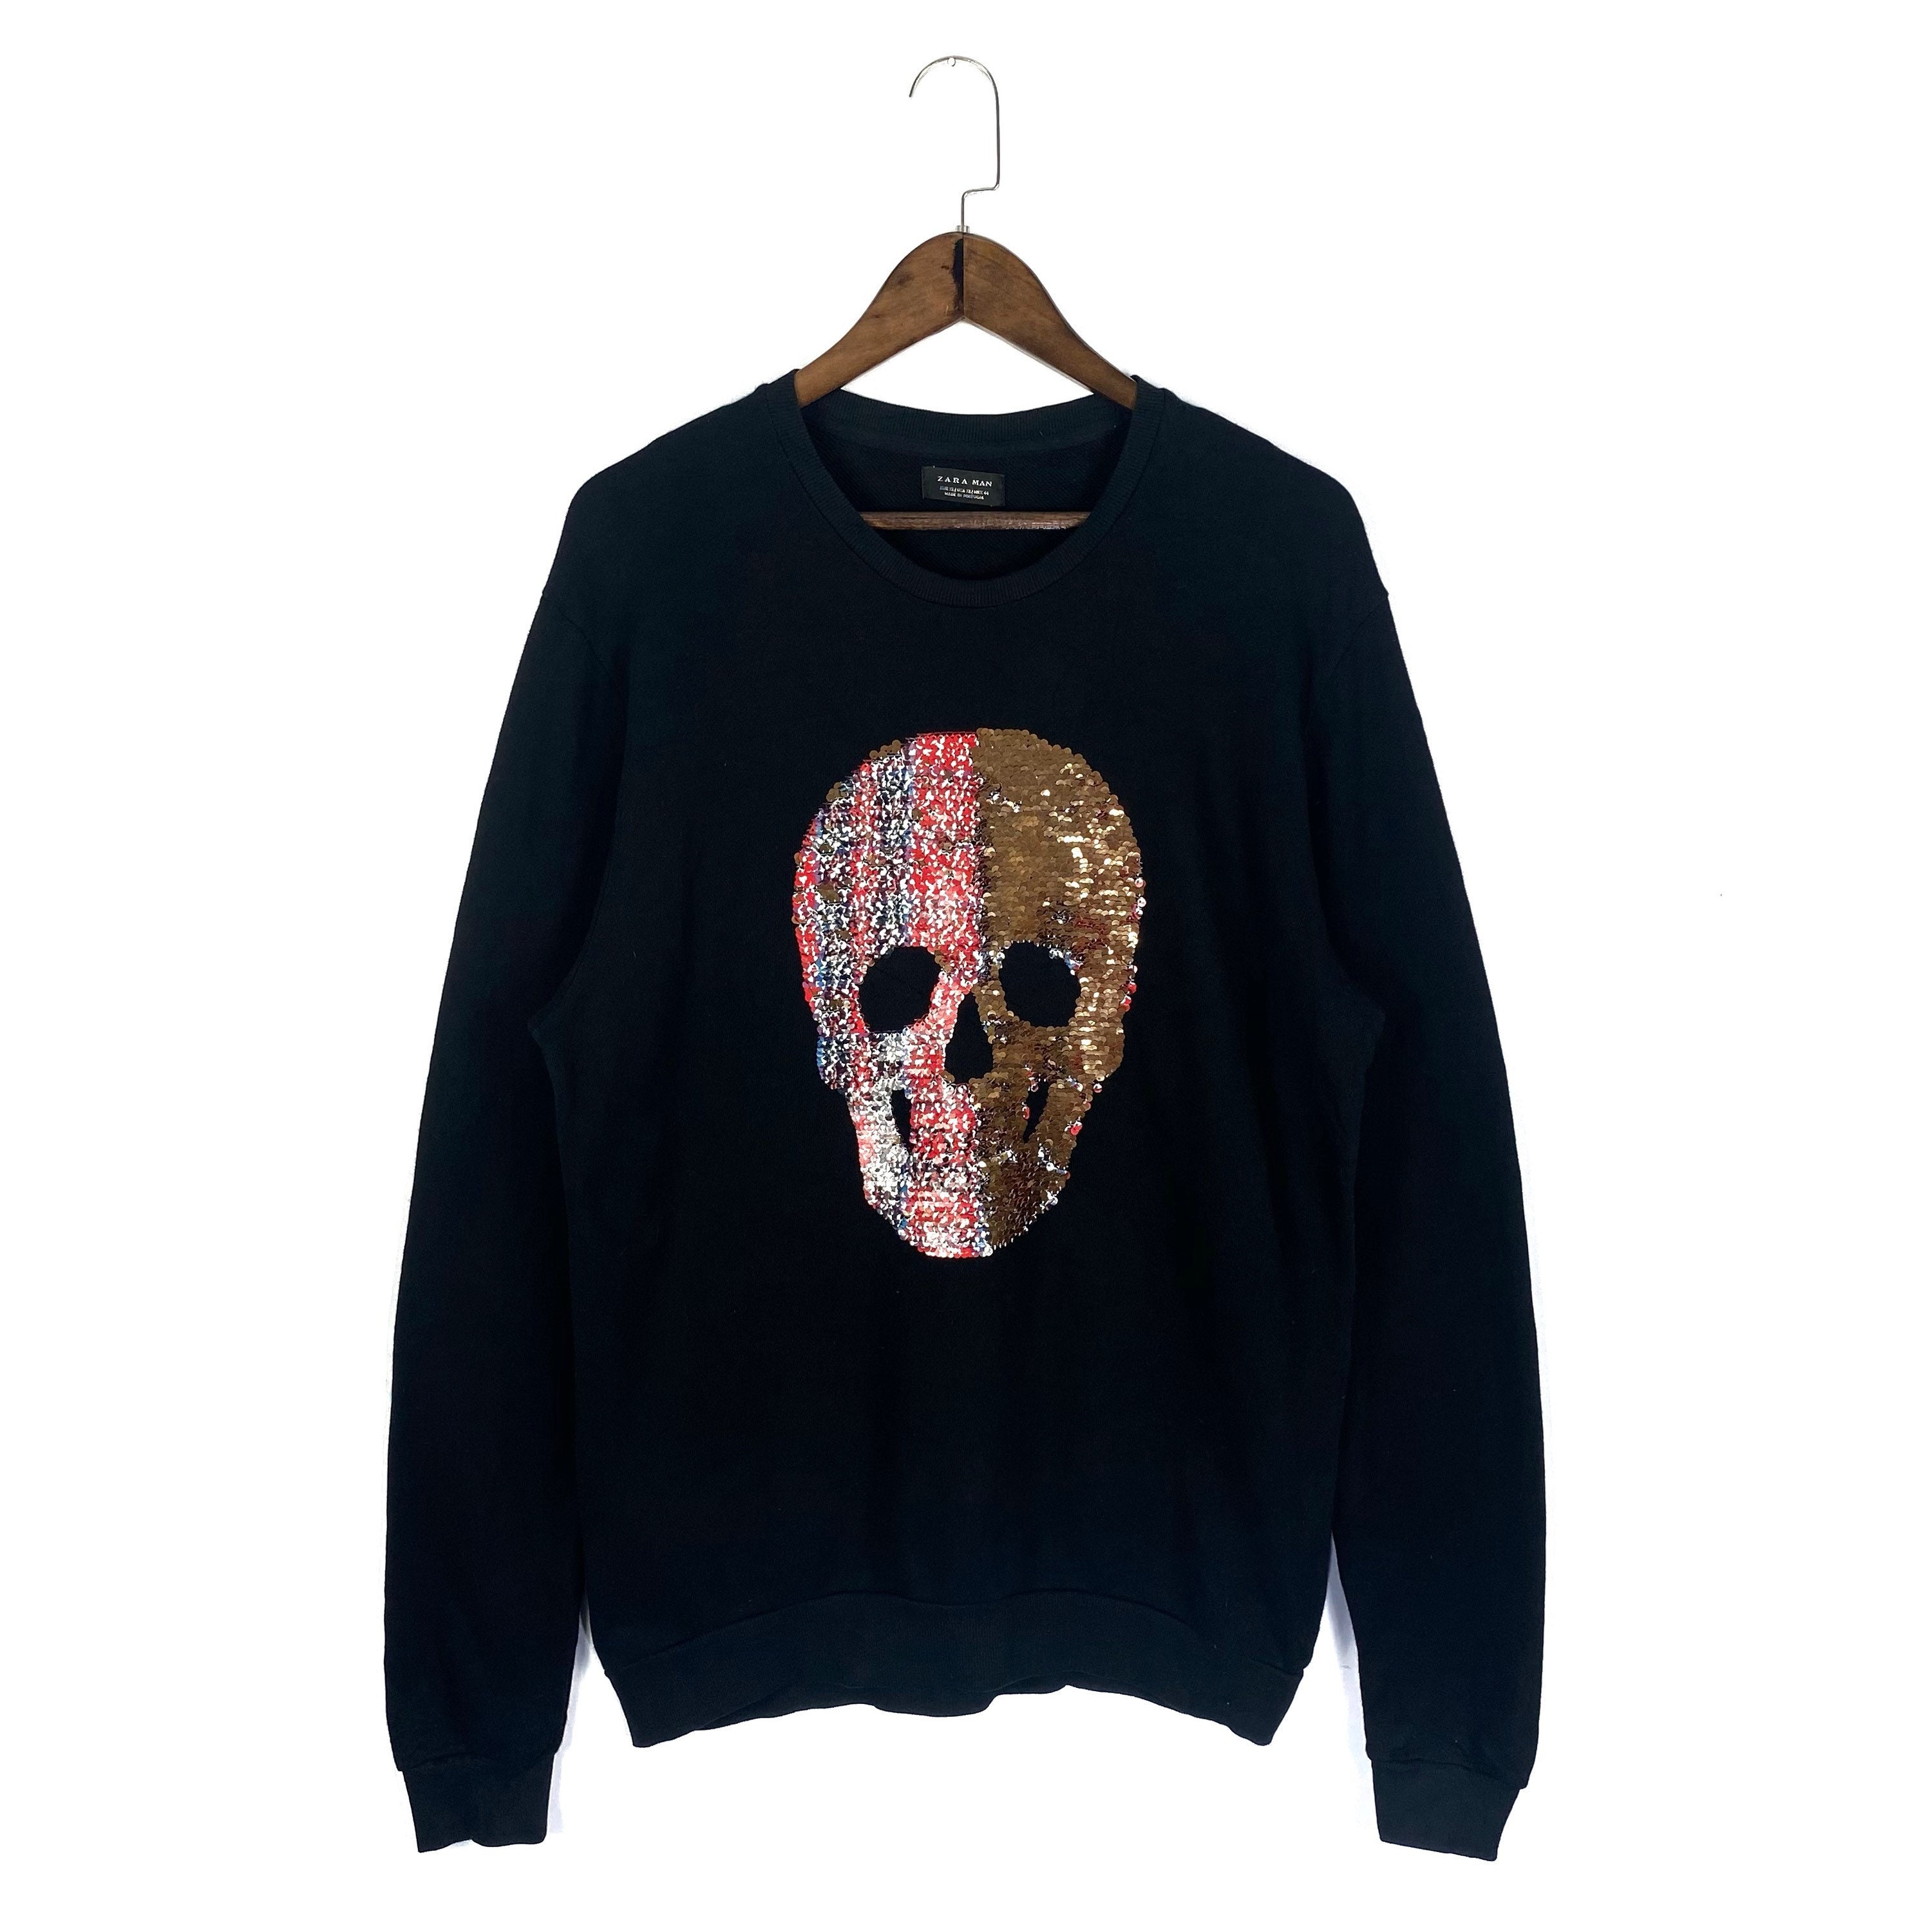 Vintage Zara Man Skull Head Bling-bling Sweatshirt Crewneck Black